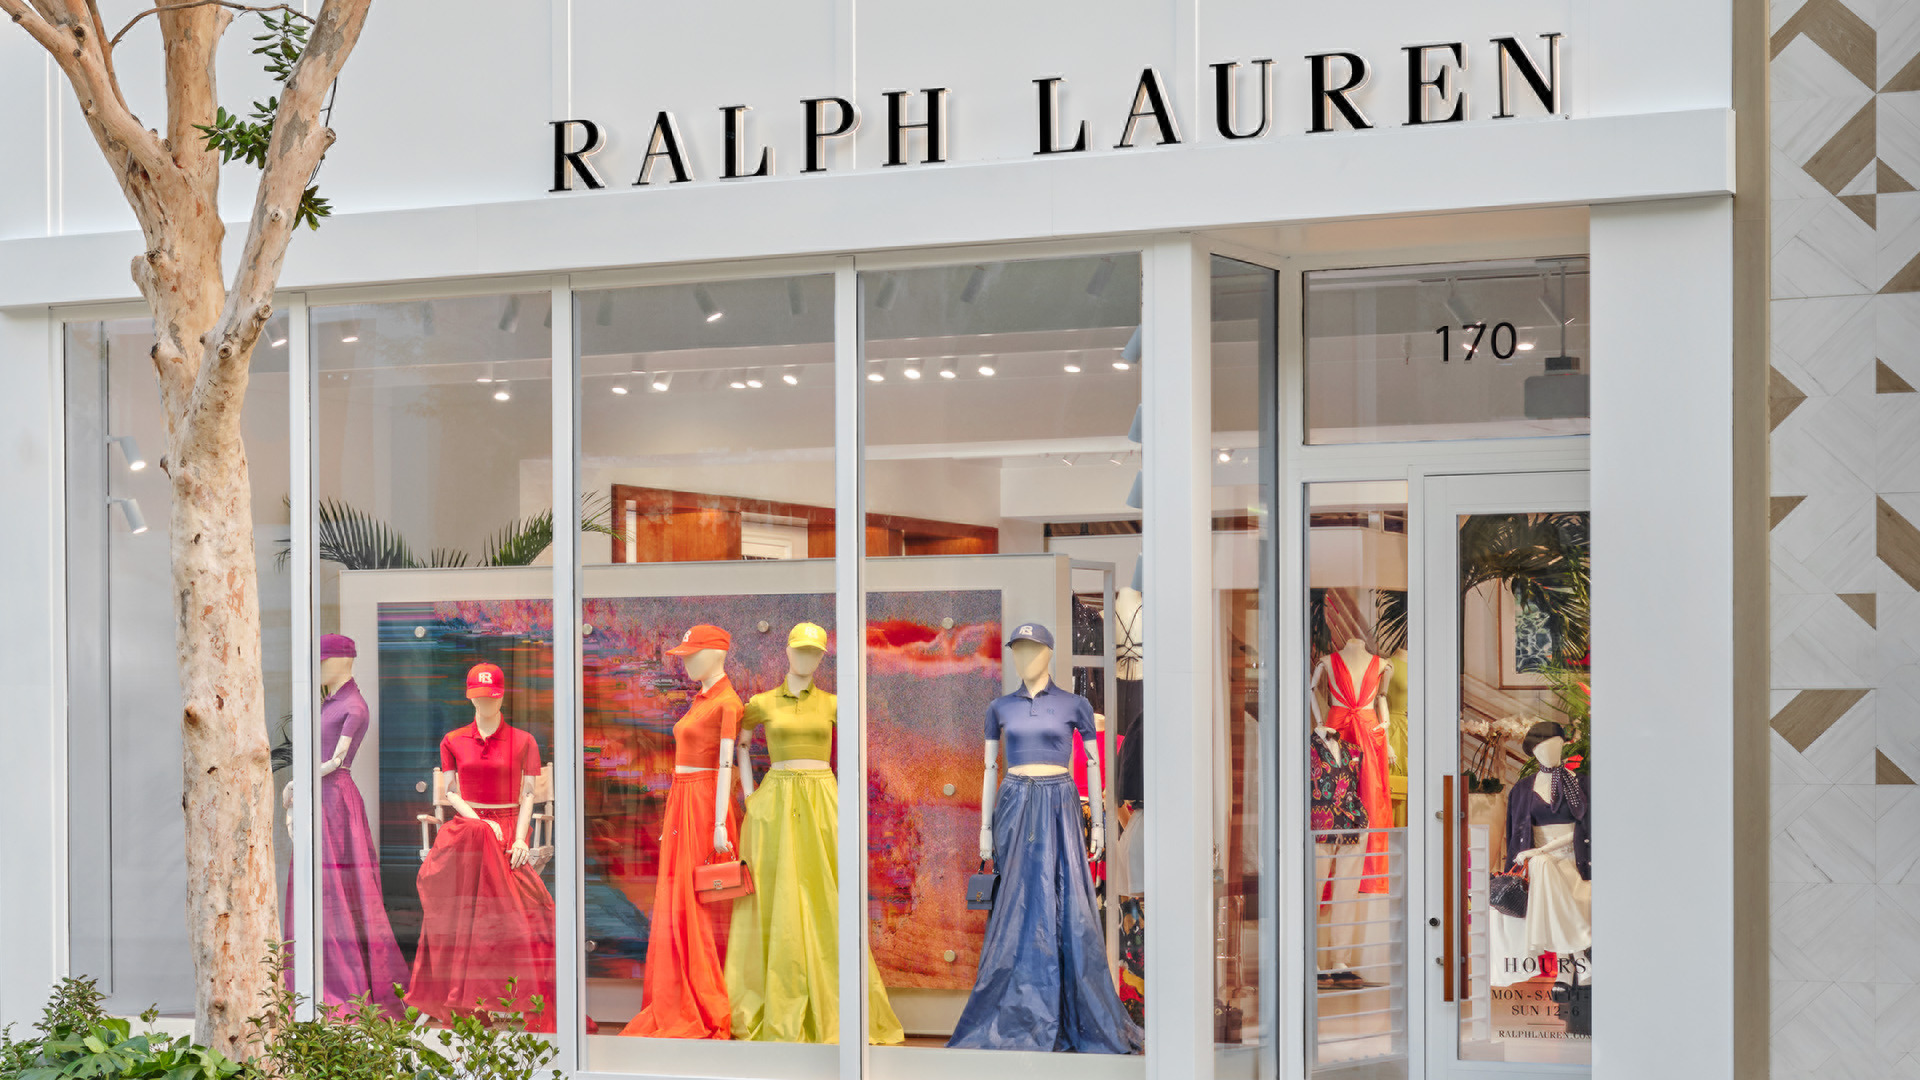 Polo Ralph Lauren Factory Store - Shopping